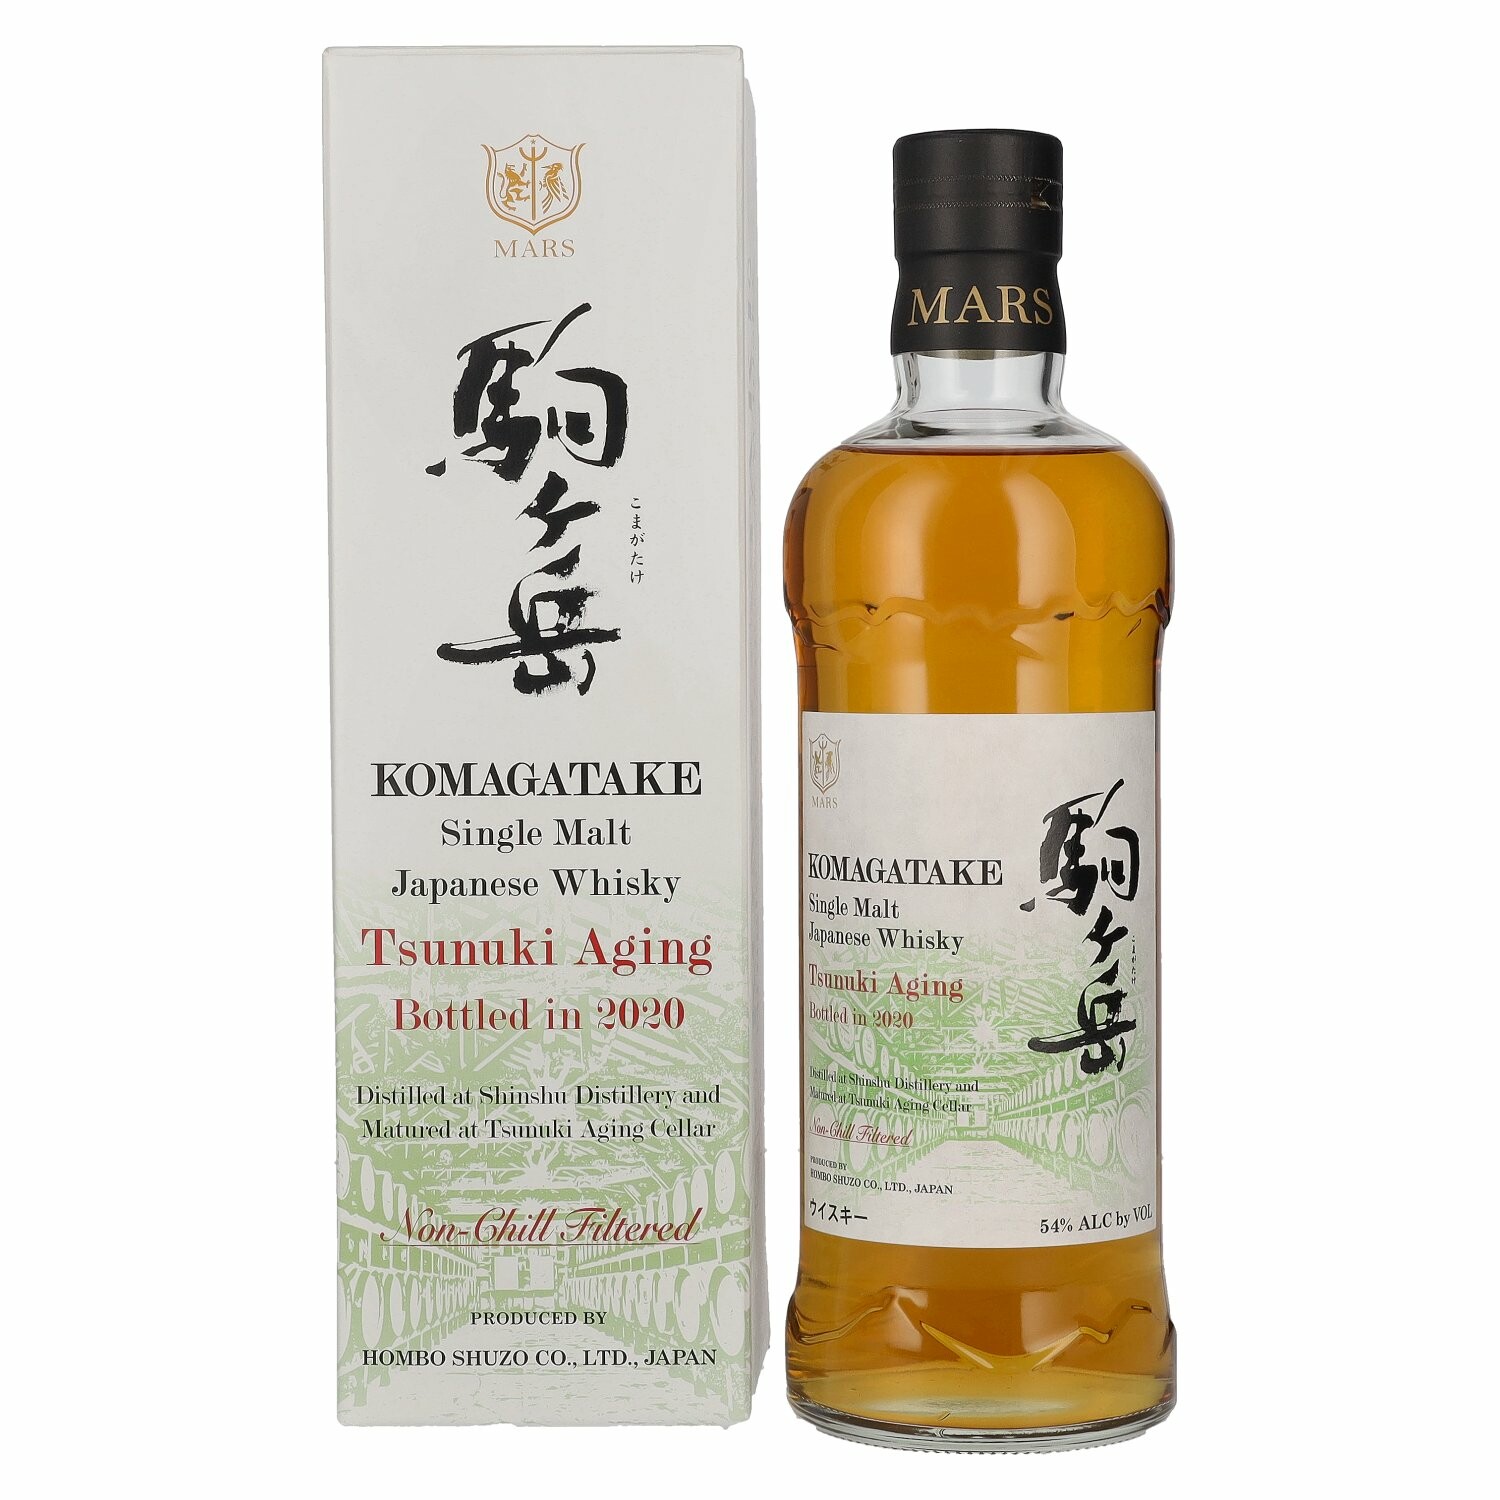 Mars KOMAGATAKE Single Malt Japanese Whisky TSUNUKI AGING 2020 54% Vol. 0,7l in Giftbox